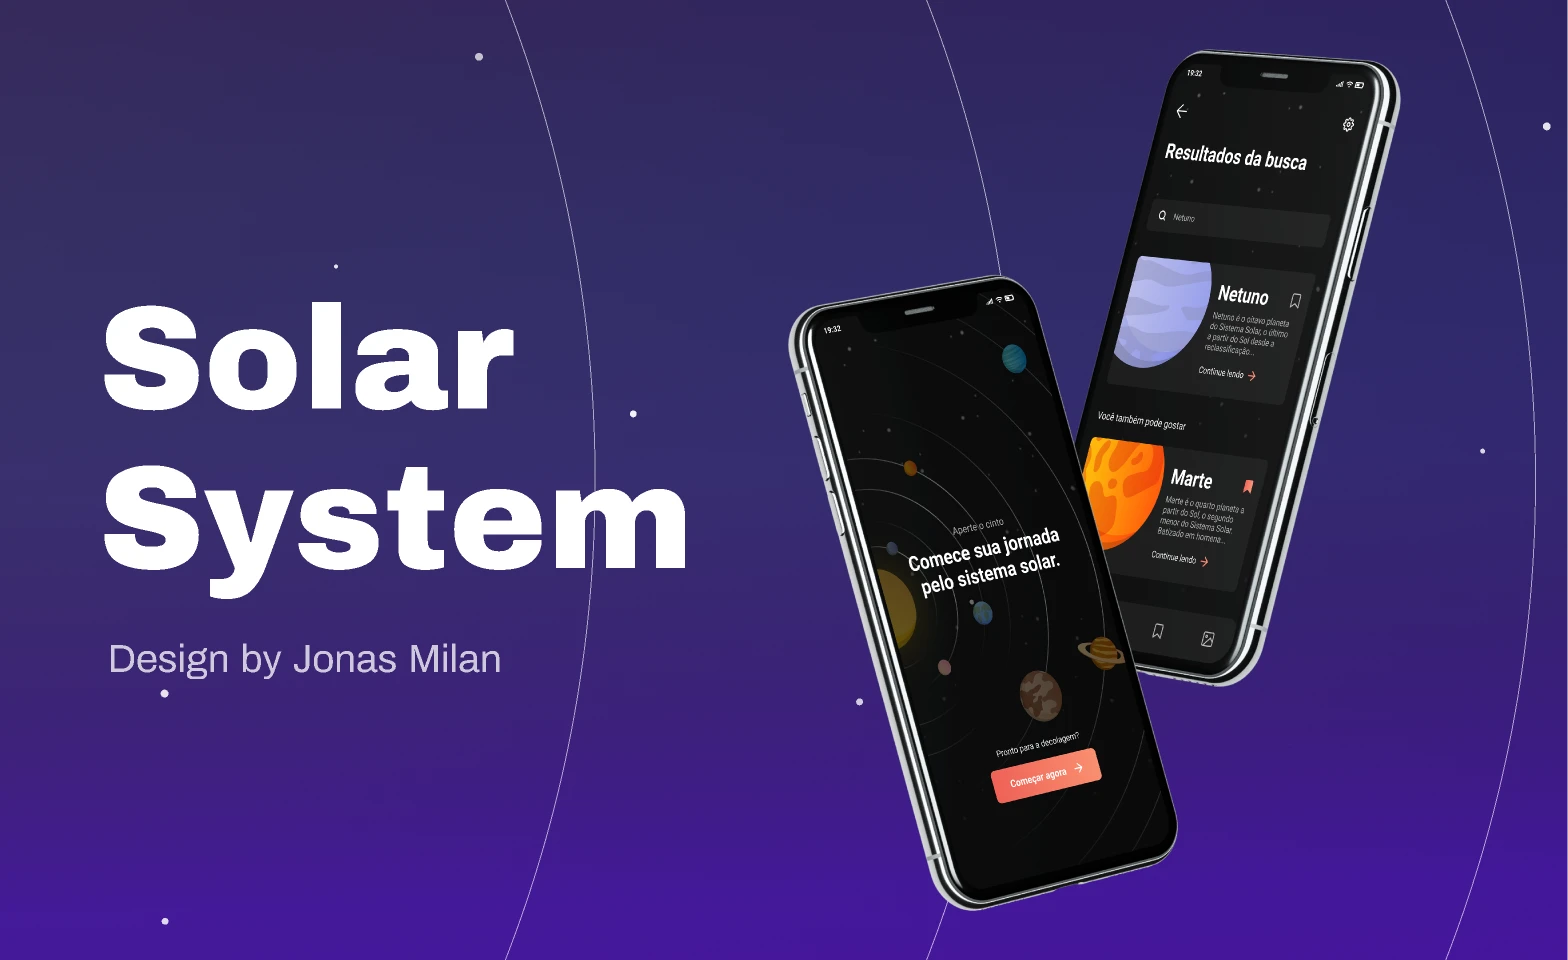 Solar System - Jonas Milan for Figma and Adobe XD